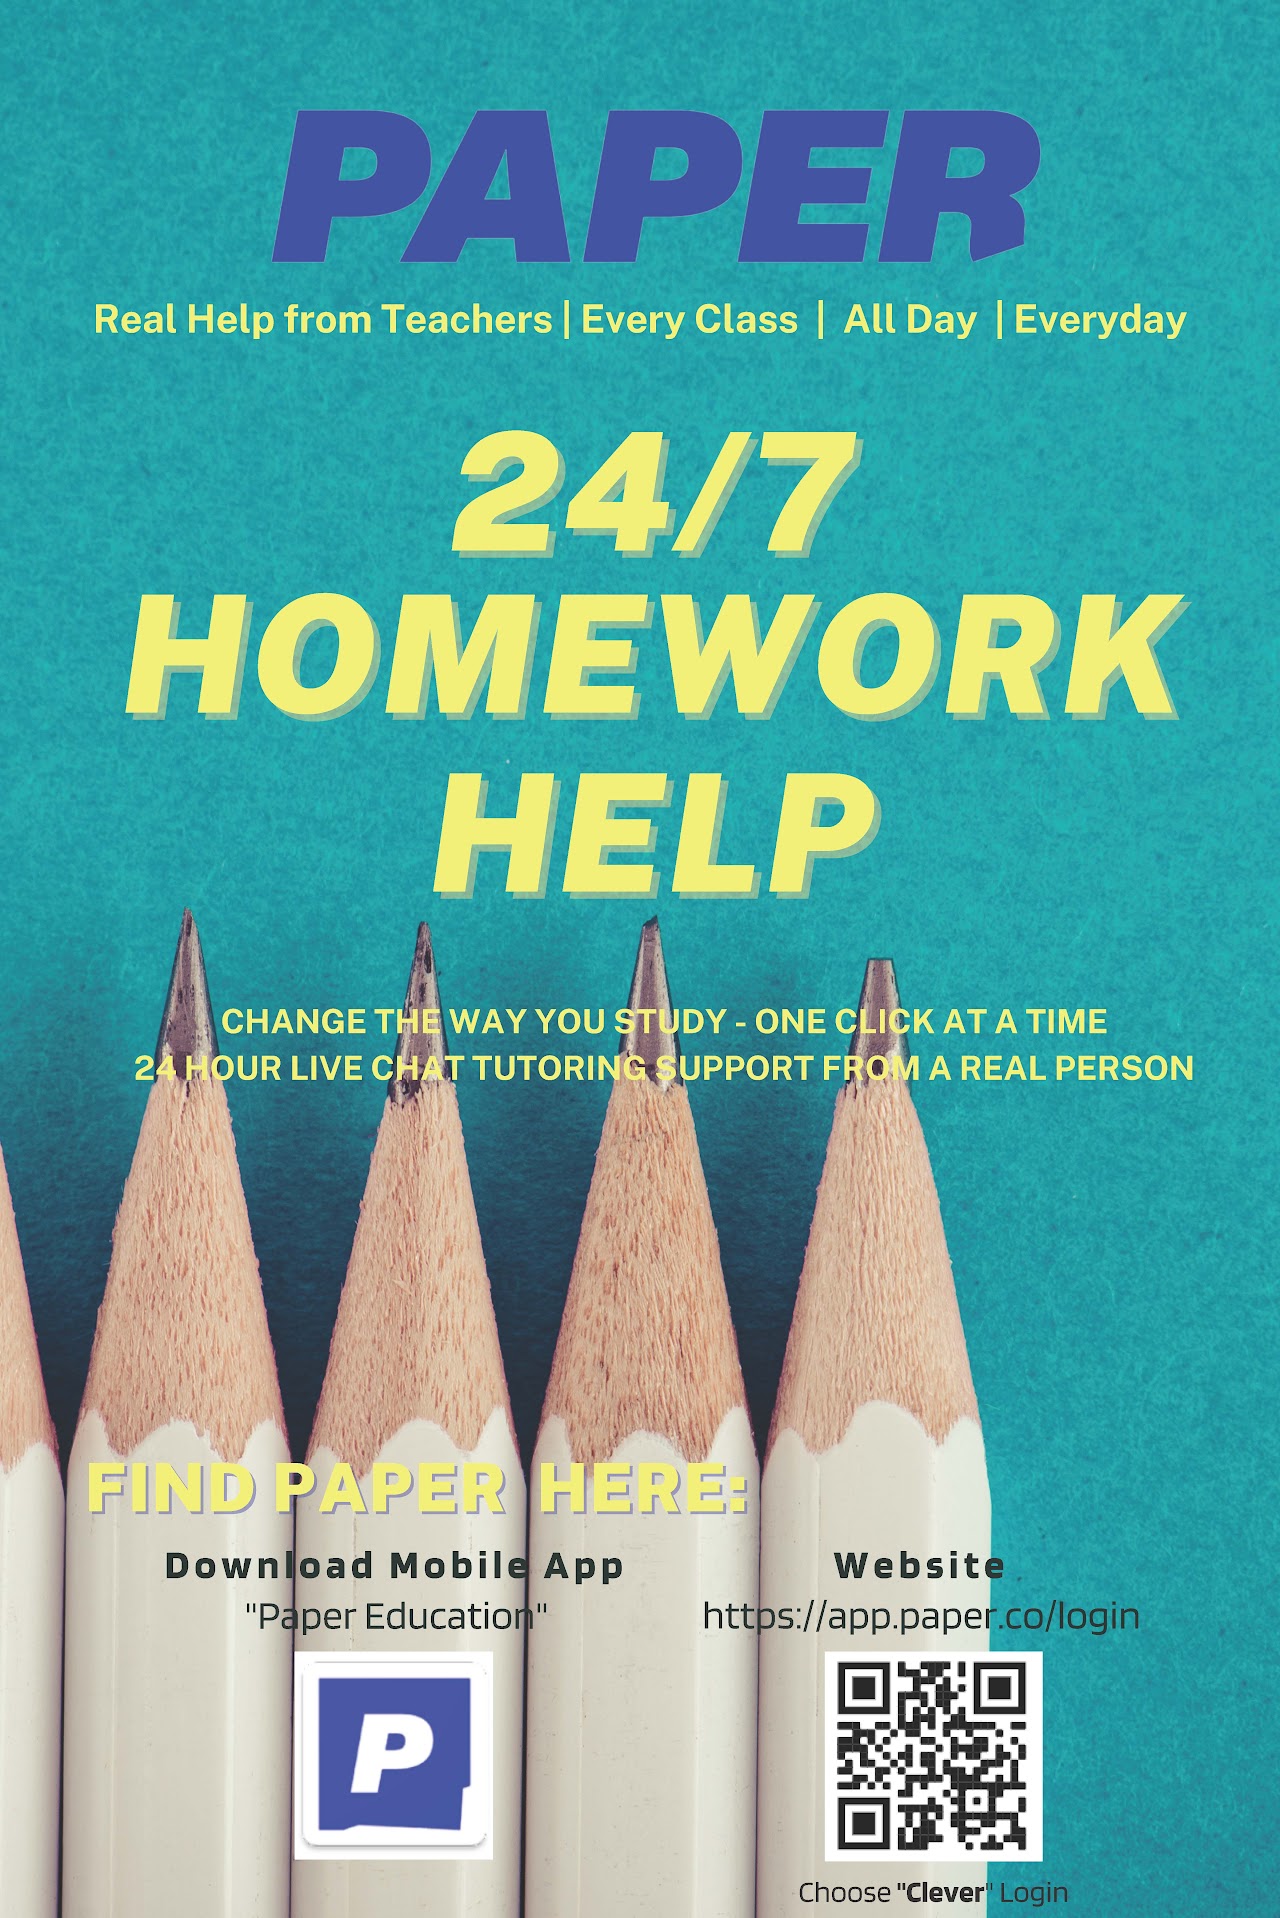 Paper 24/7 Homework Help with a QR Code